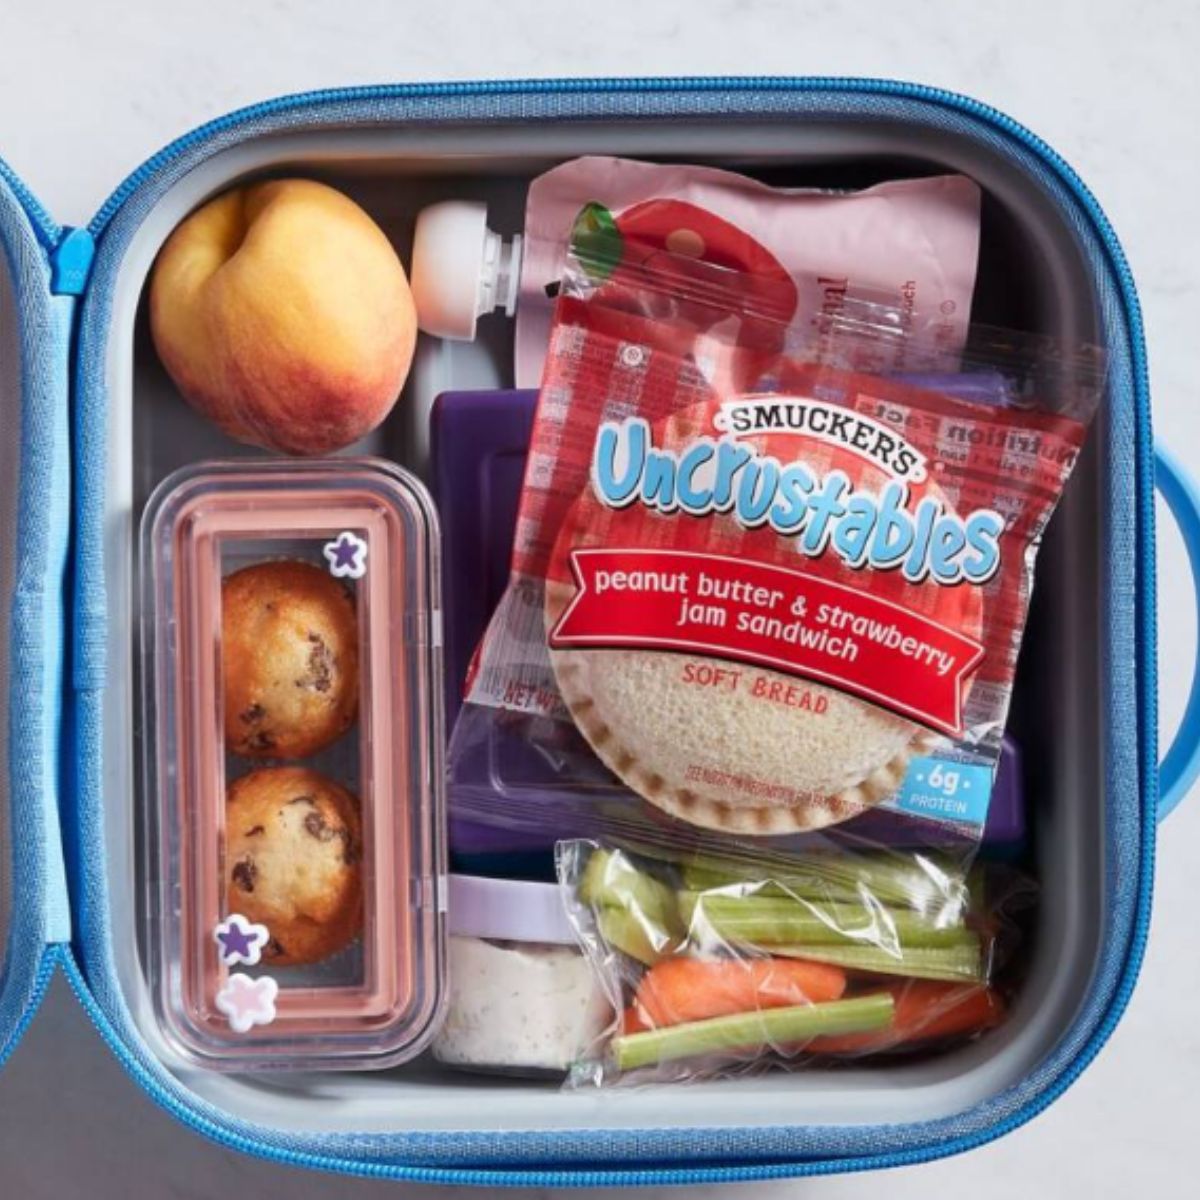 Uncrustables inside of a school lunch box